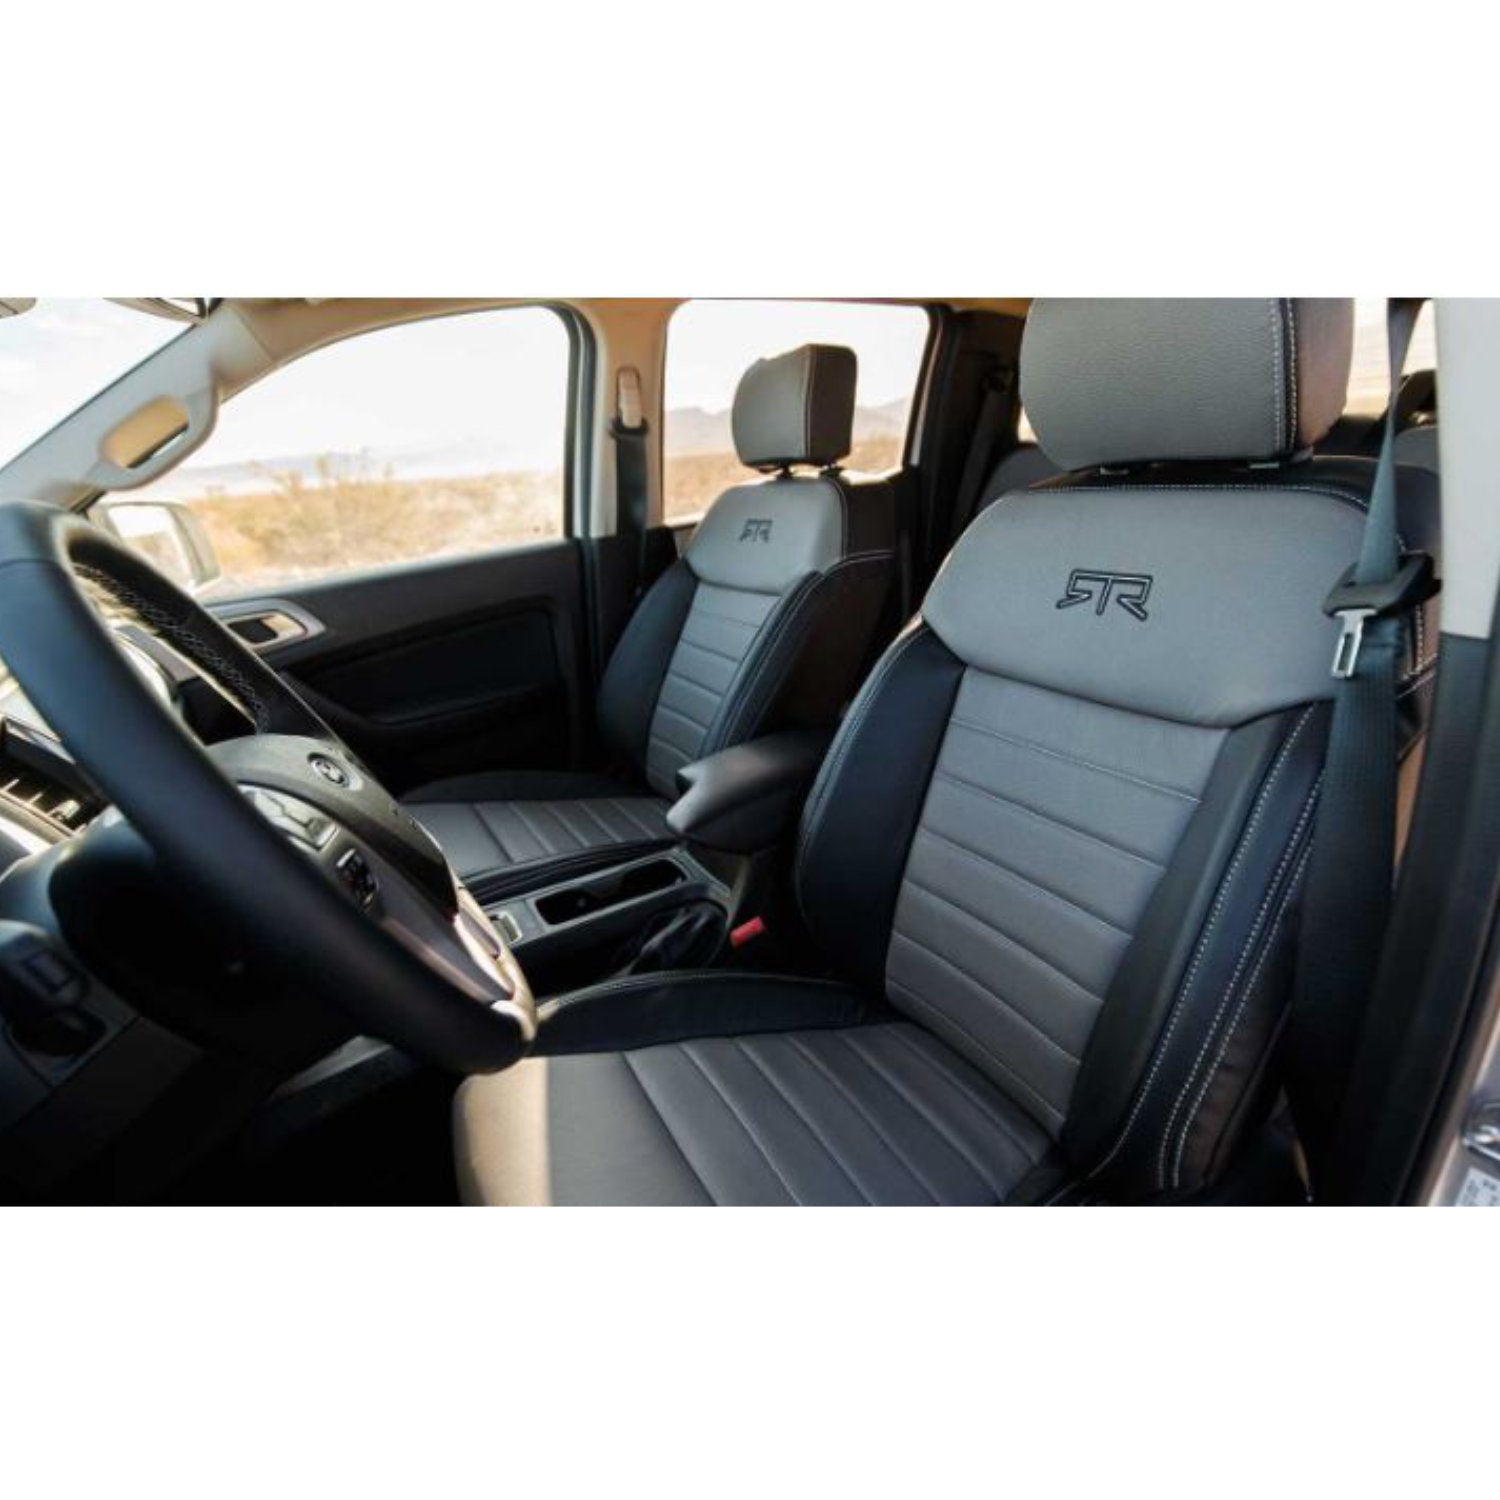 RTR Ranger Leather interior trim